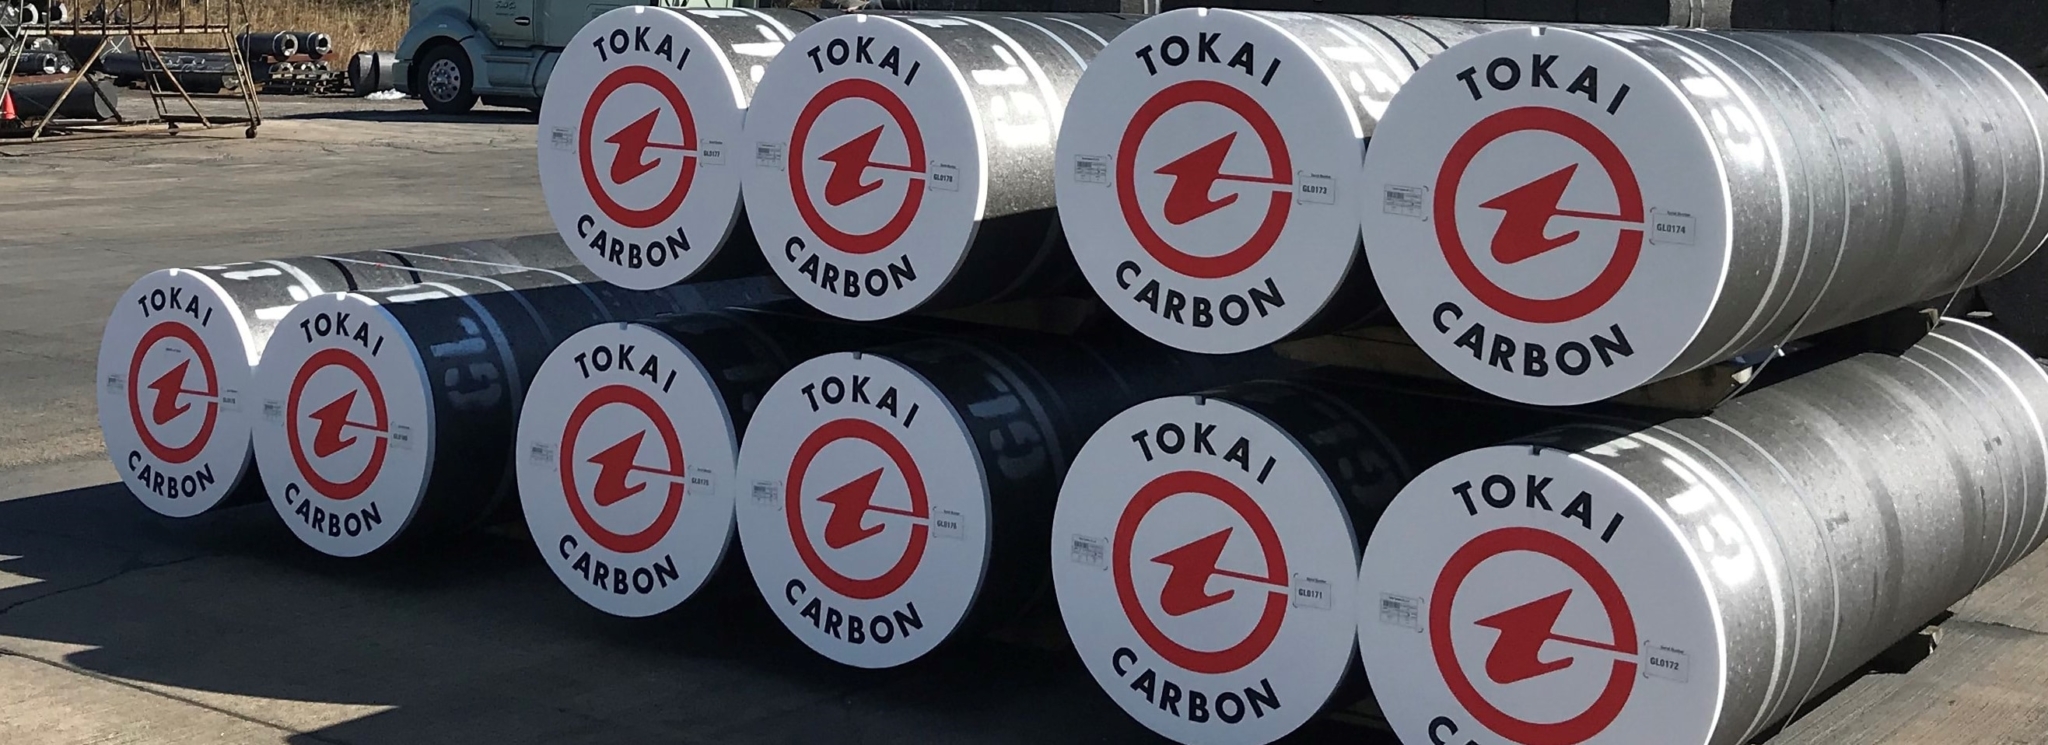 Cabot buys Tokai’s Tianjin carbon black plant for $9 million